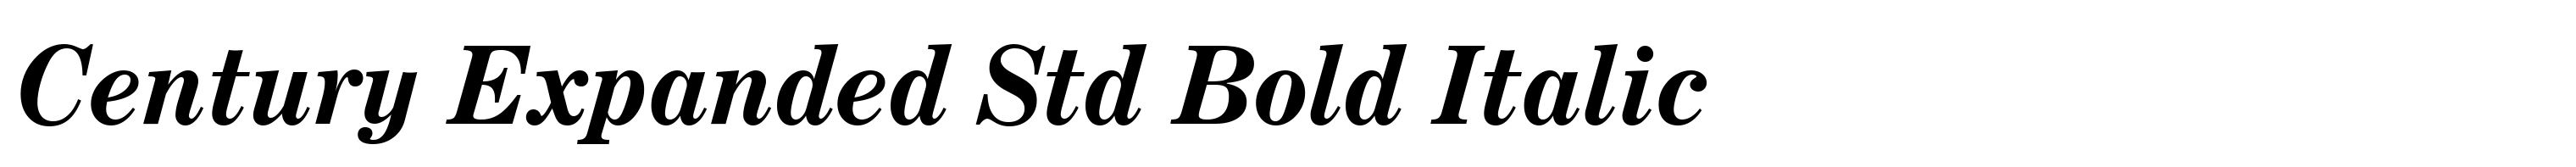 Century Expanded Std Bold Italic